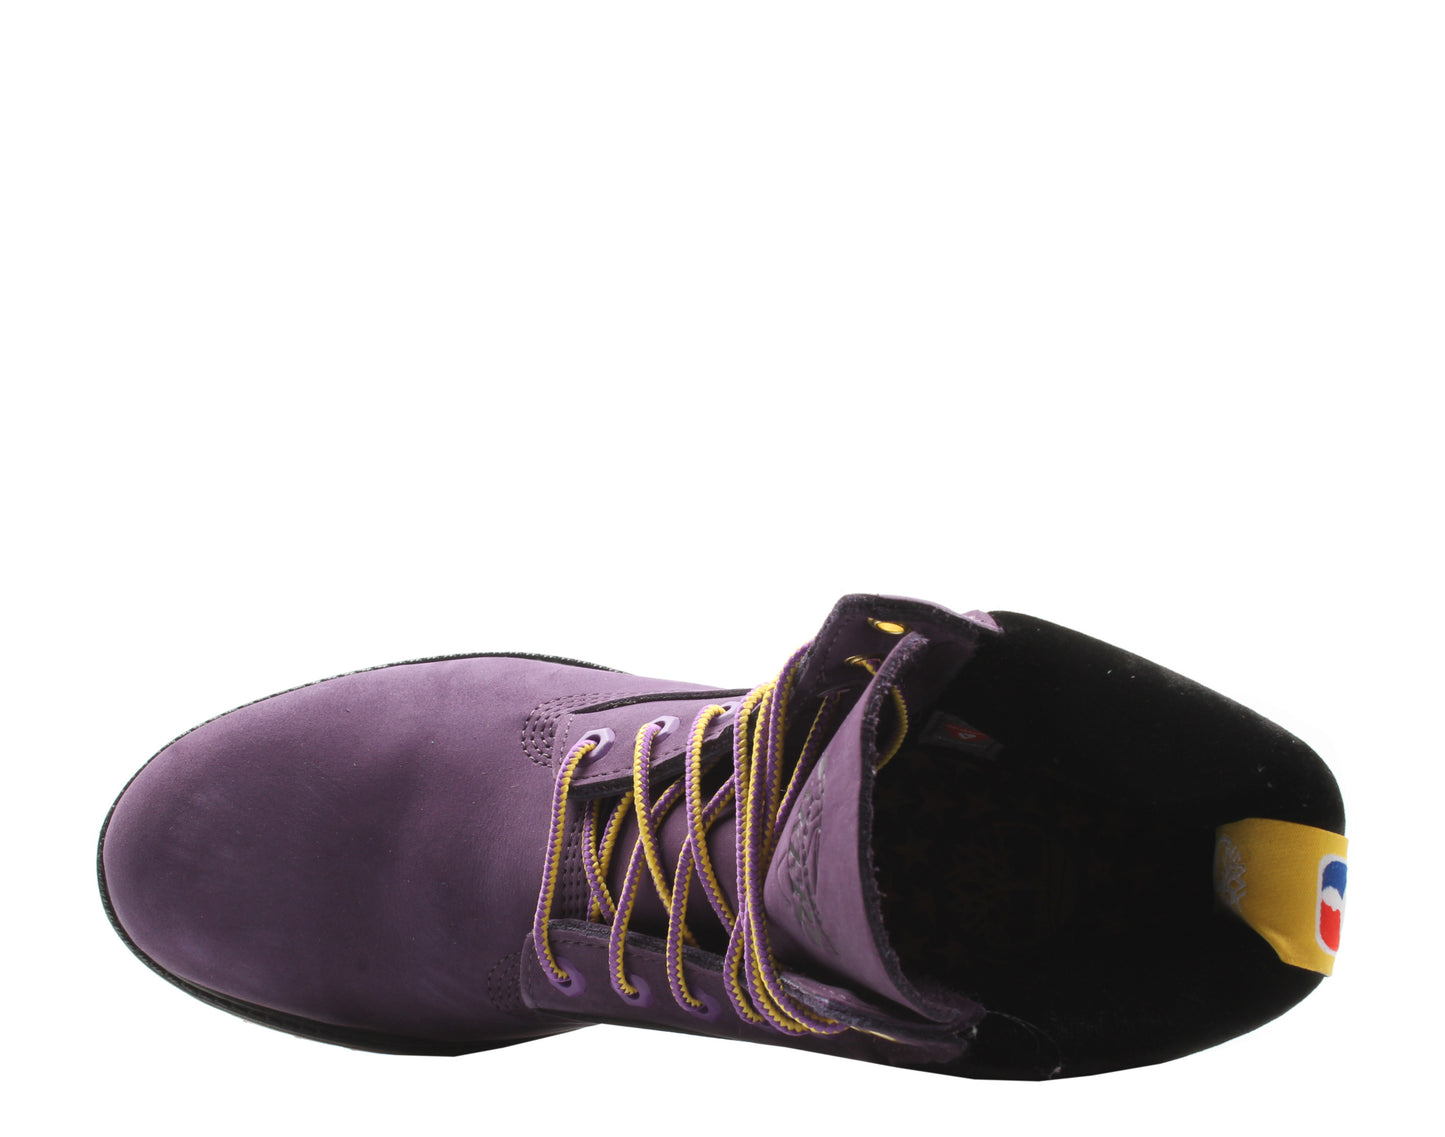 Timberland x NBA LA Lakers 6-Inch Waterproof Dark Purple Men's Boots A285H